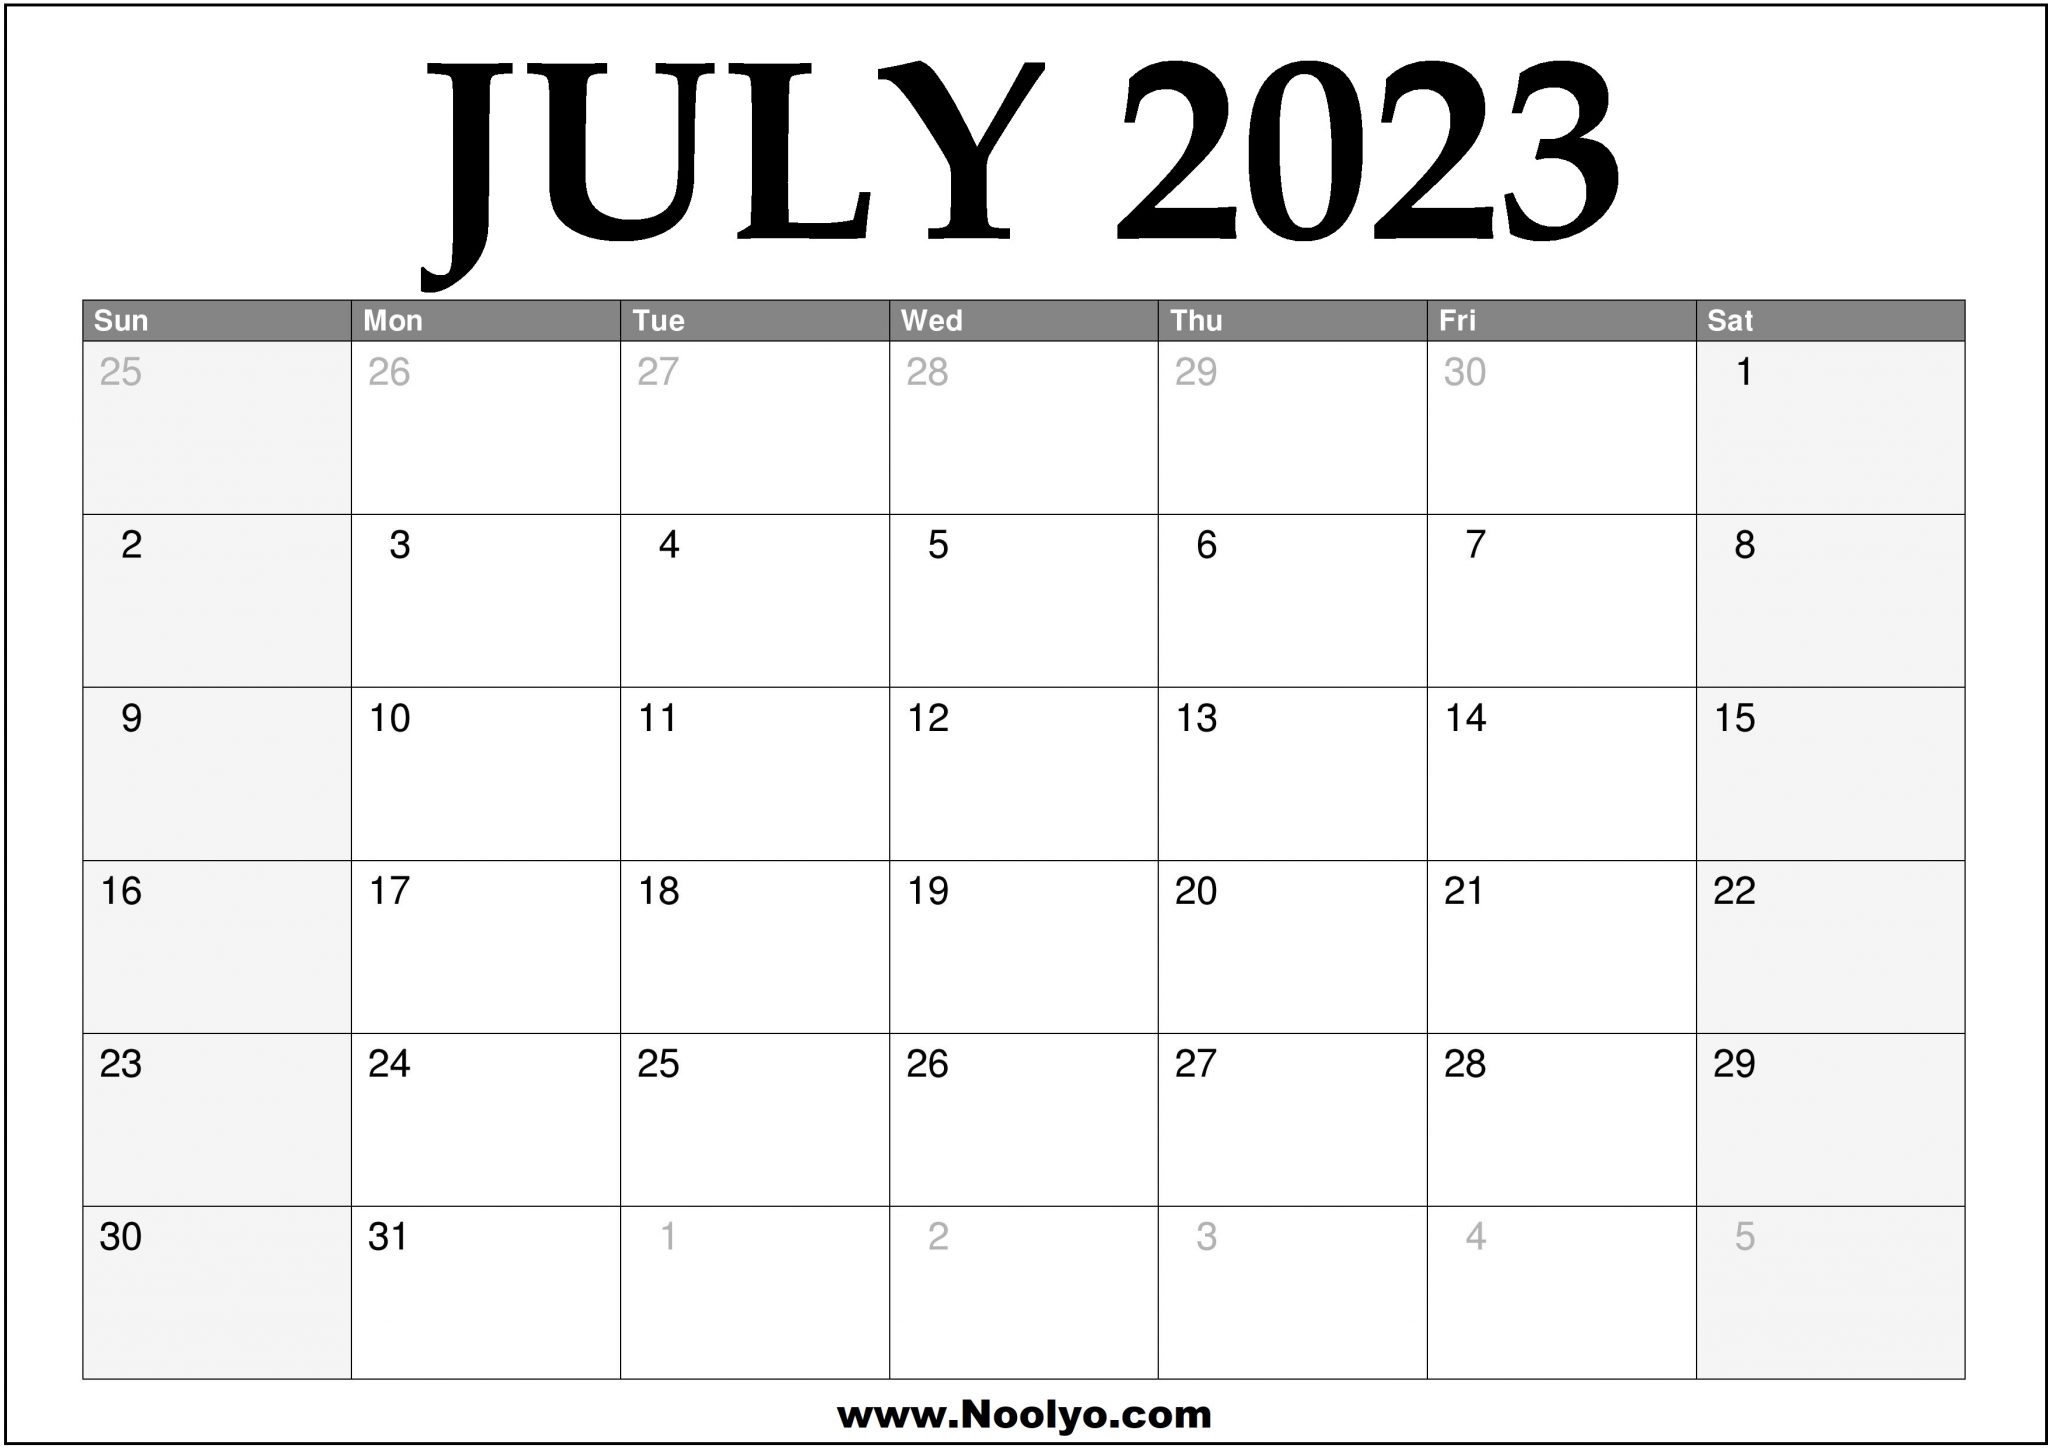 Download Printable July 2023 Calendars July 2023 Print Out Calendar July 2023 Calendar